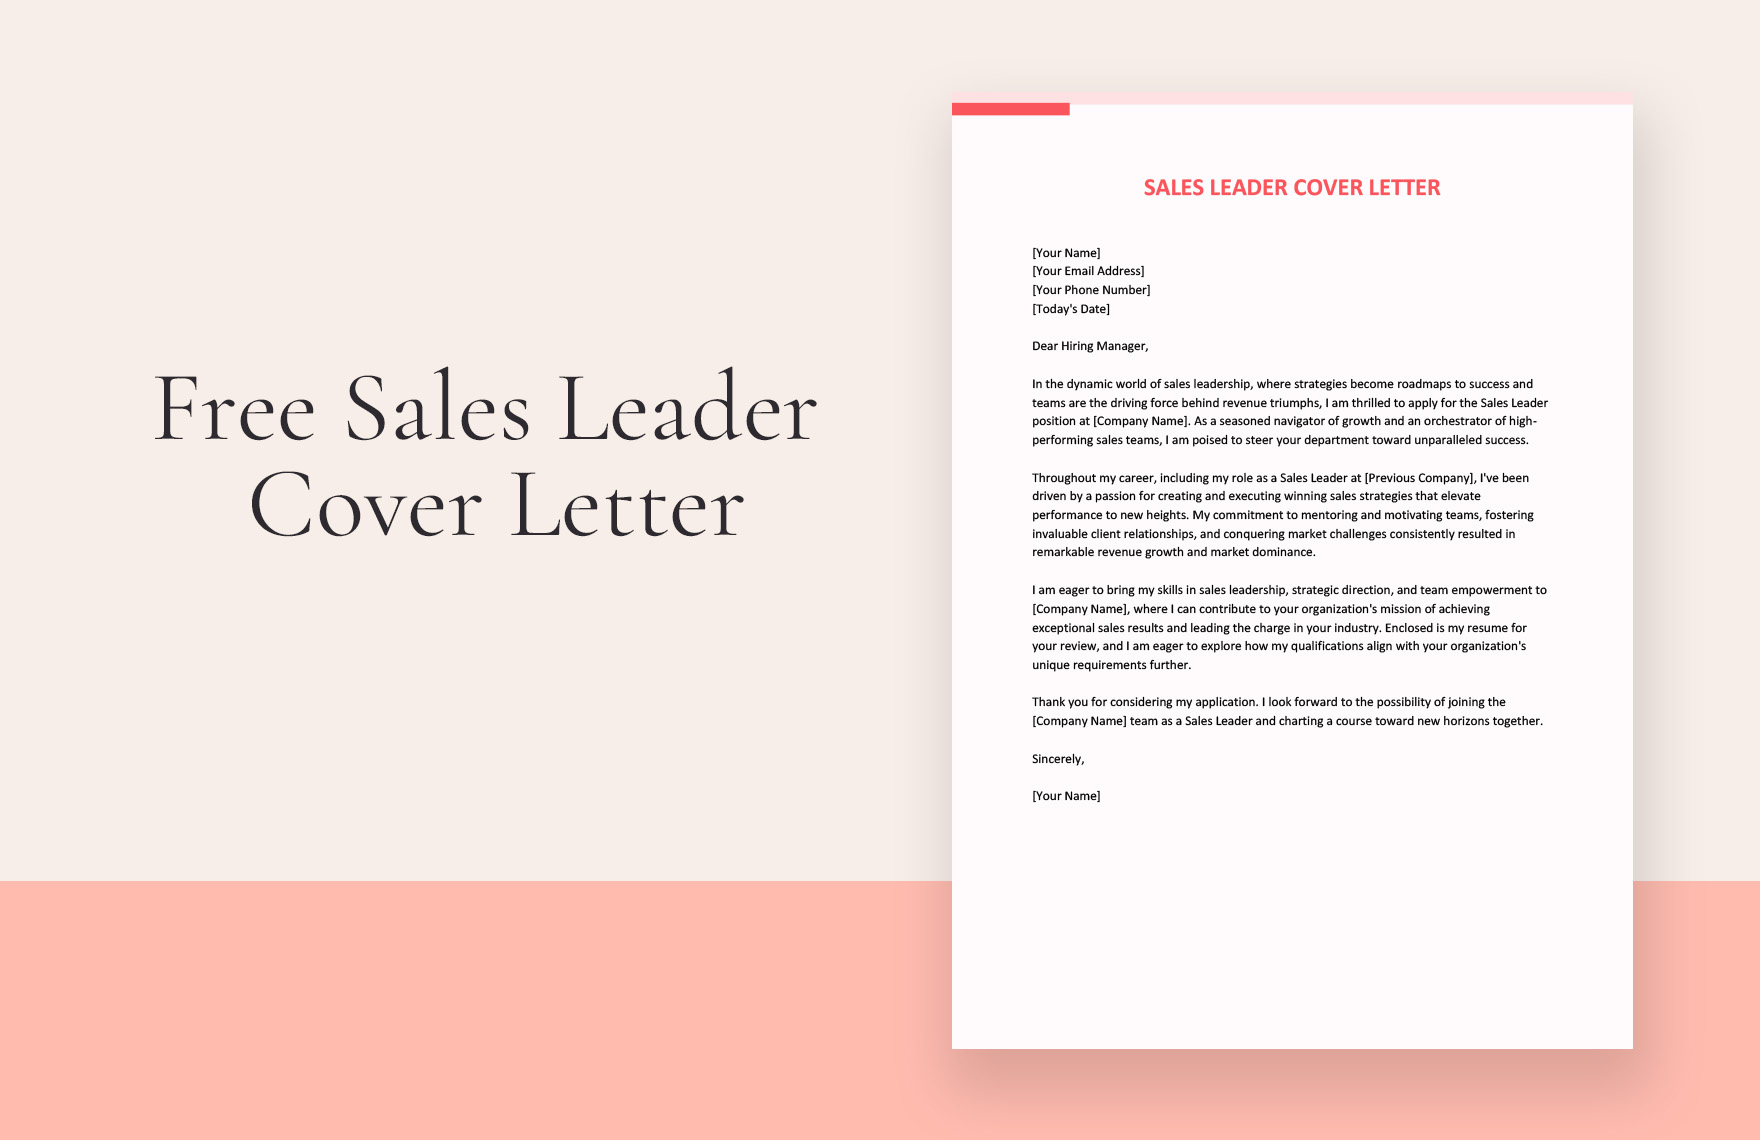 Sales Leader Cover Letter in Word, Google Docs